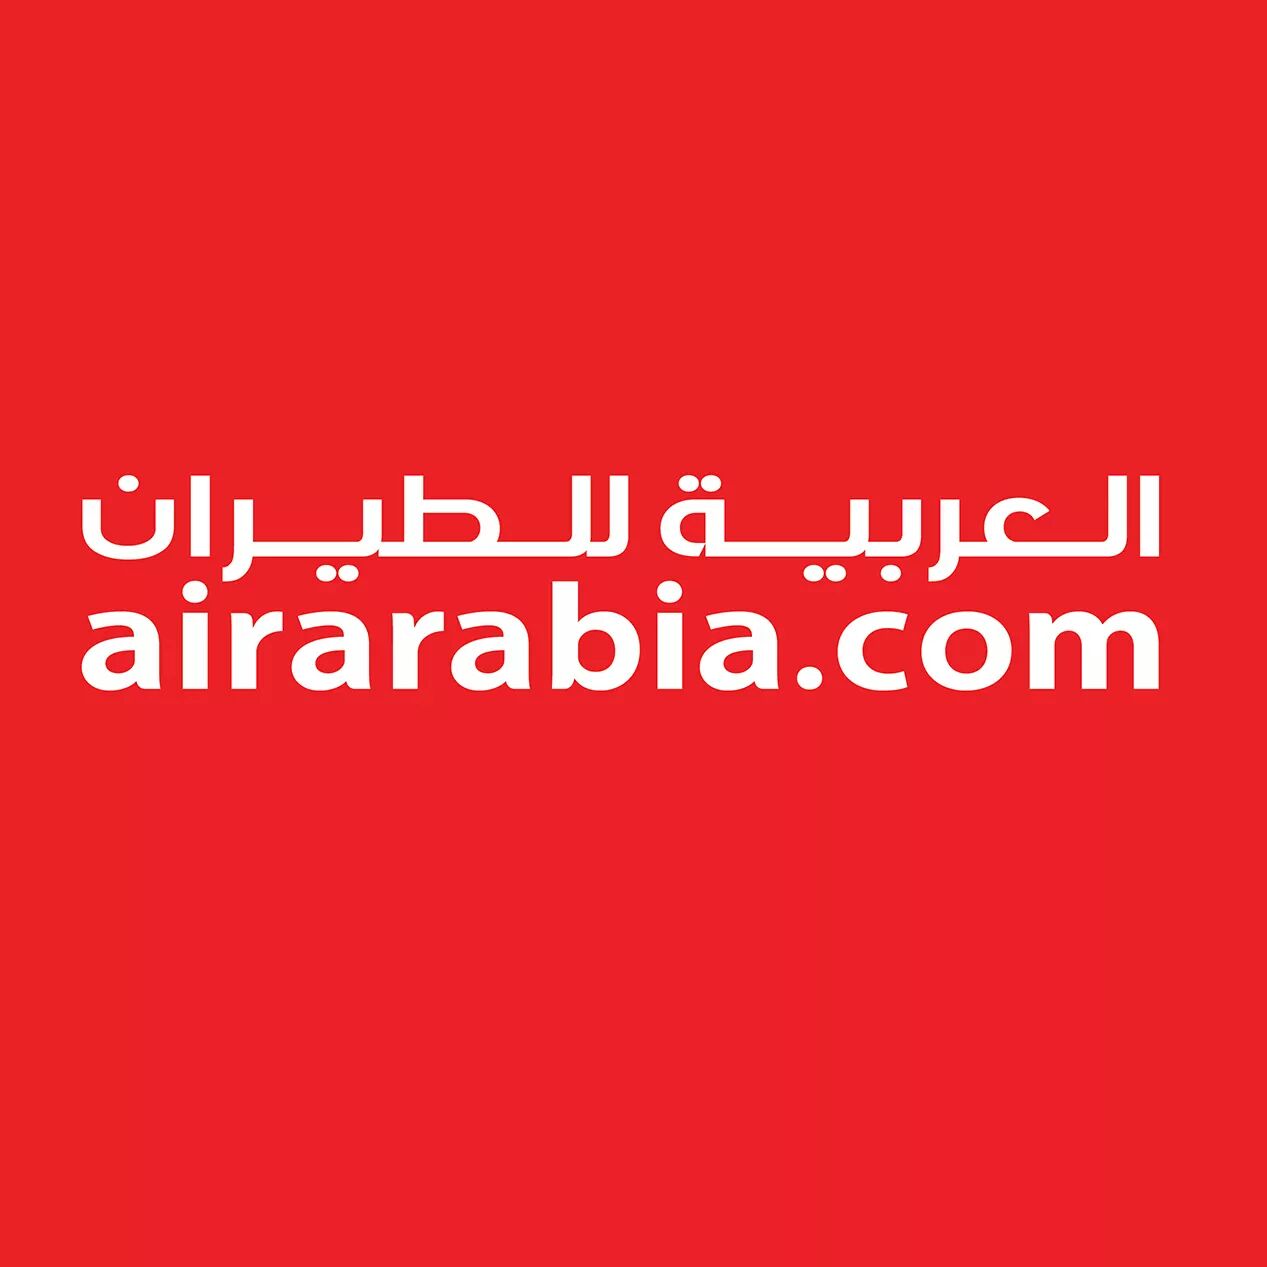 Air arabia сайт на русском. AIRARABIA.com. AIRARABIA logo. Air Arabia. Air Arabia логотип.